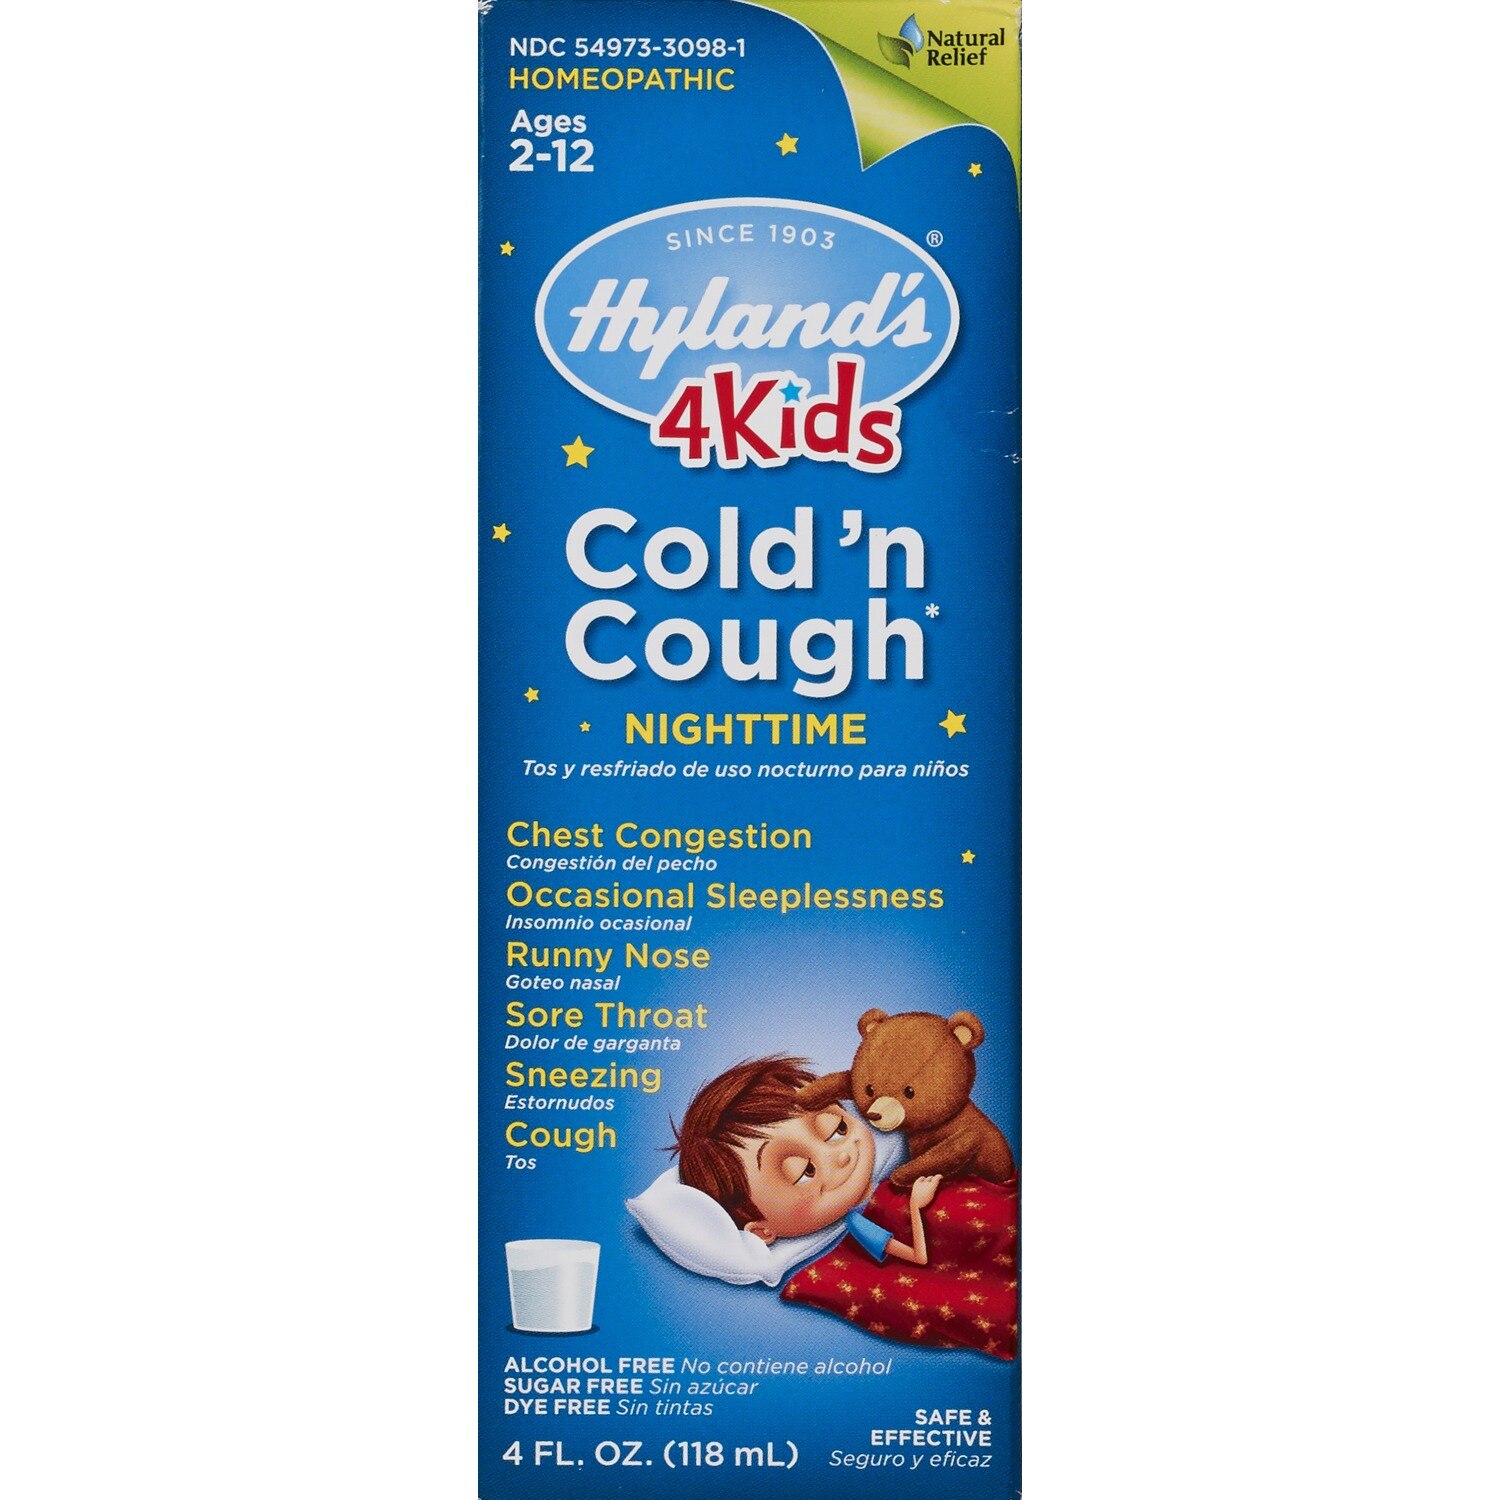 Hyland's Nighttime Cold 'n Cough 4 Kids - Jarabe homeopático para resfriado y tos